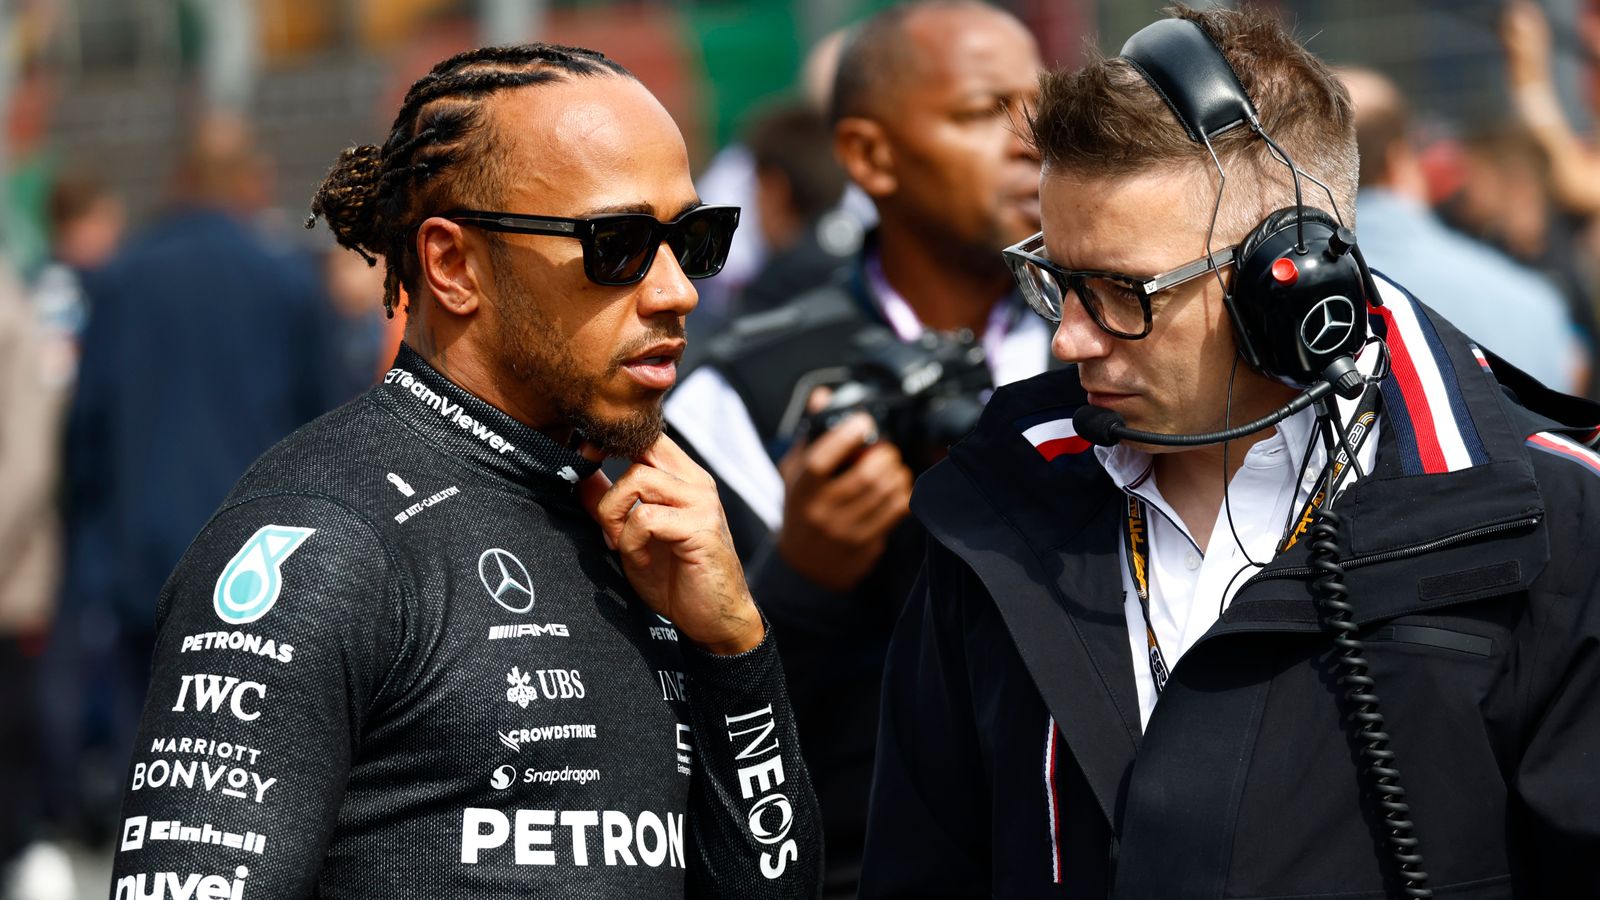 Hamilton: Mercedes had pace to challenge Verstappen